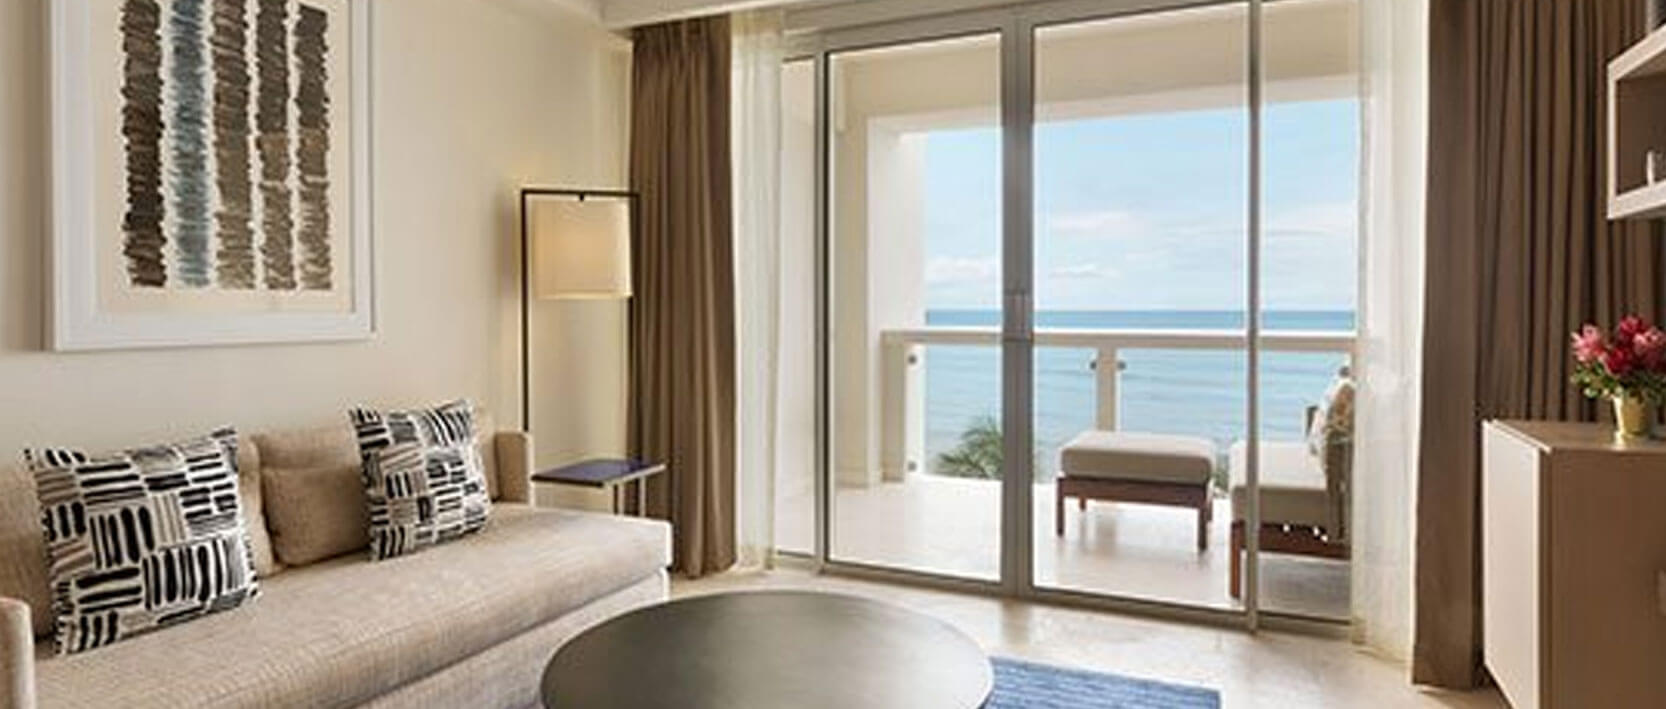 Hyatt Ziva Rose Hall Accommodations - Oceanfront Junior Suite King or Double